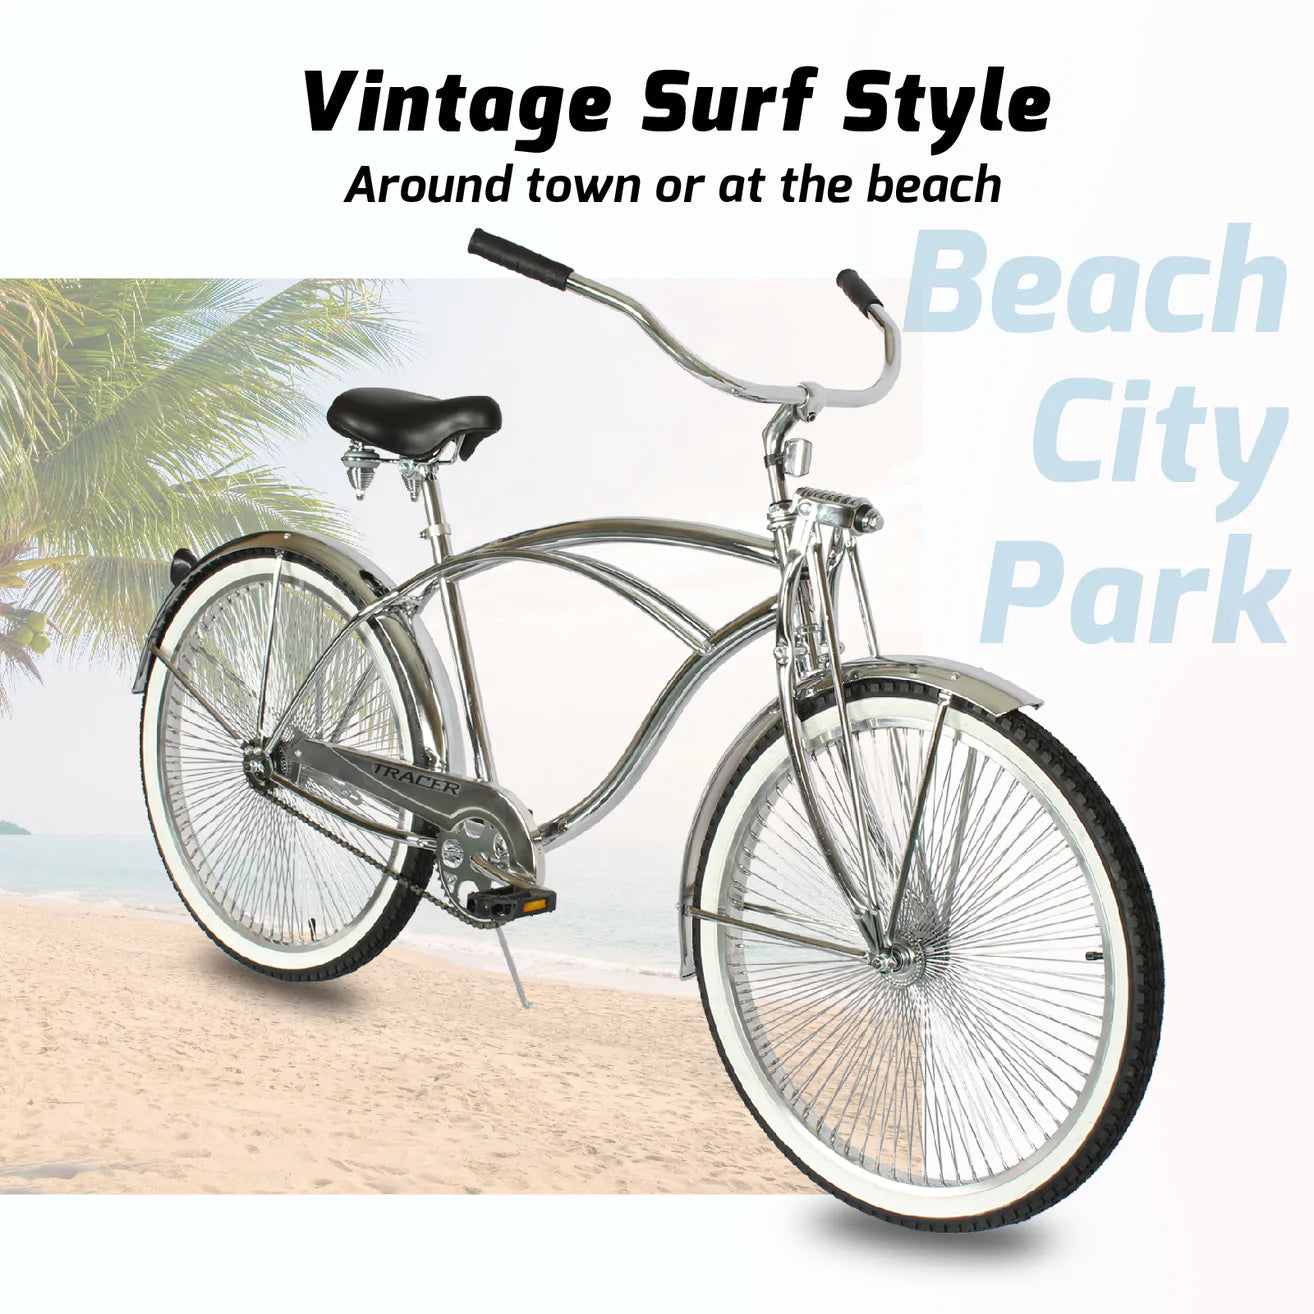 Cheetah Single Speed Cruiser Bike - Chrome | Single Speed | Cruiser Bike | Adult Bikes | Beach Cruiser Bikes | Bike Lover USA